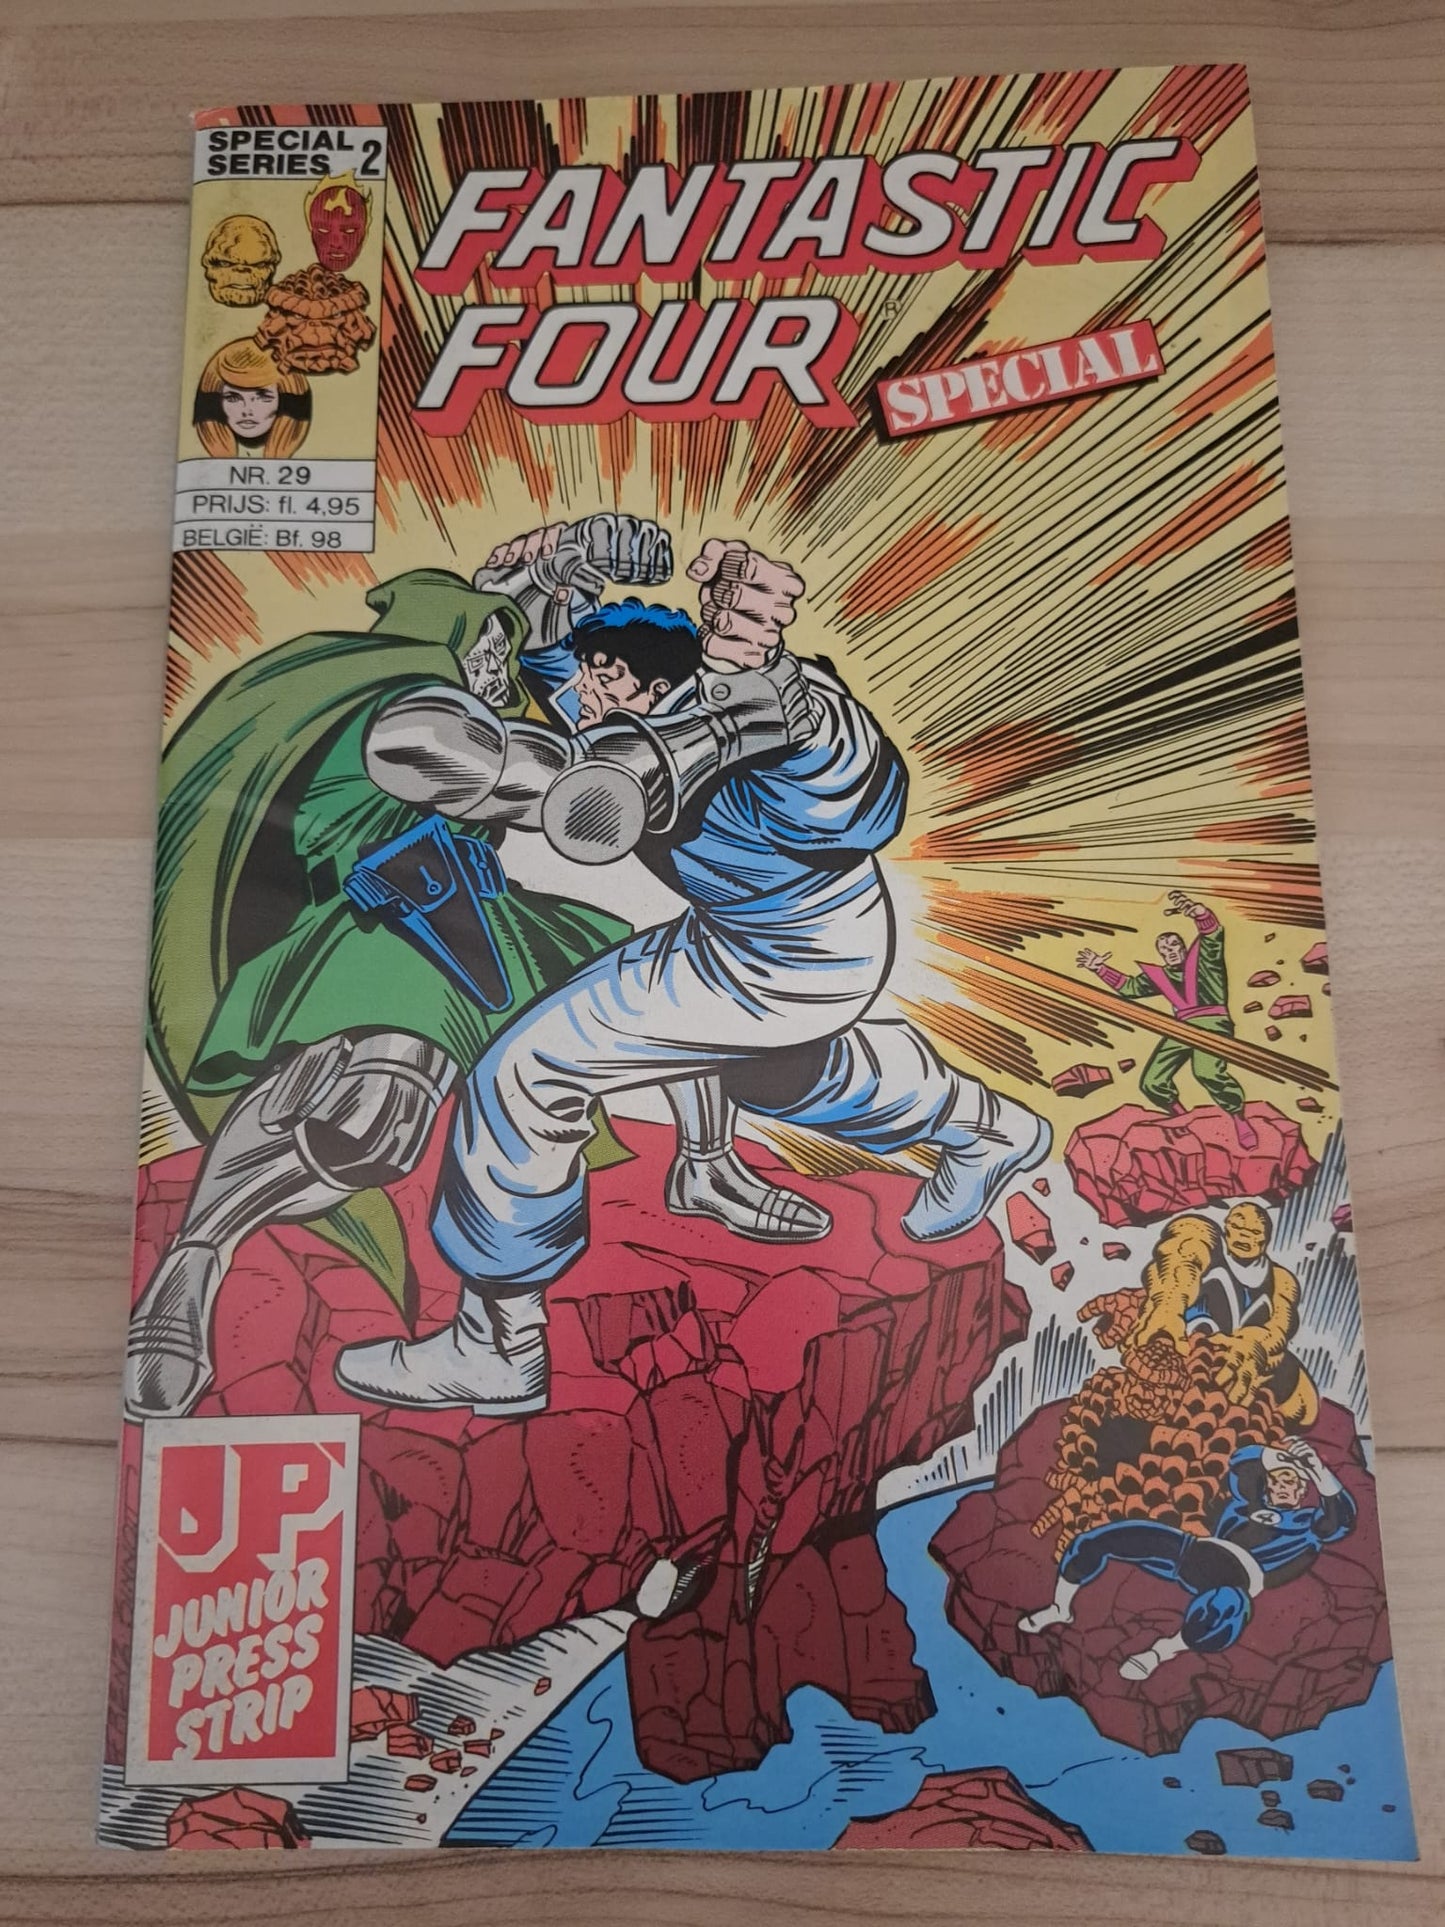 Fantastic Four #29